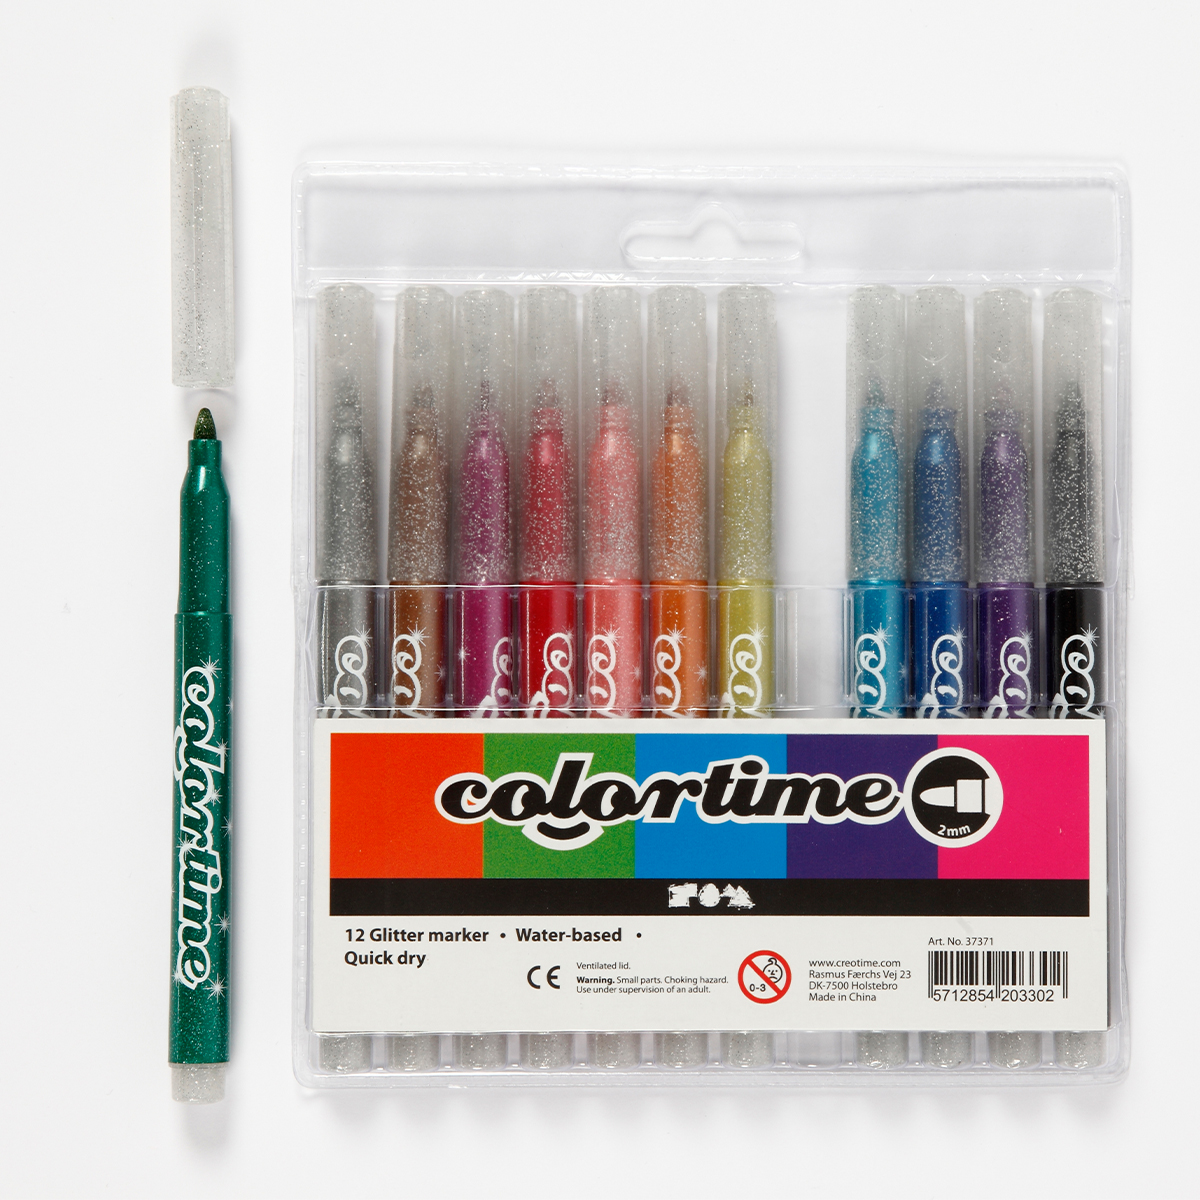 All Art Supplies for Painting  Glitter paint pens, Paint marker pen, Paint  pens